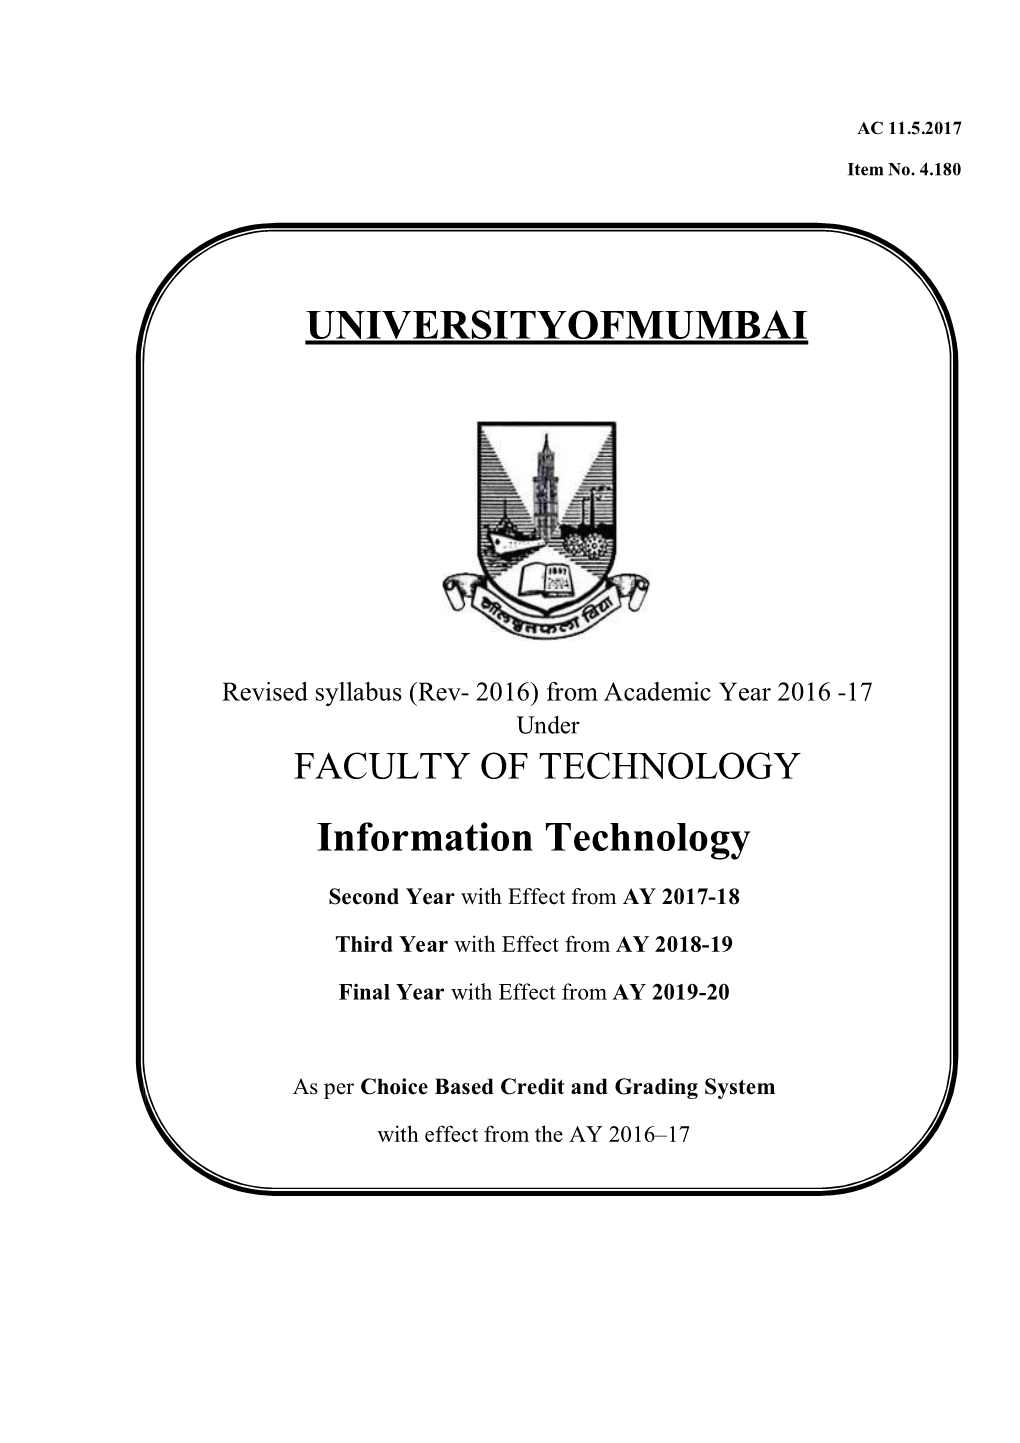 UNIVERSITYOFMUMBAI Information Technology